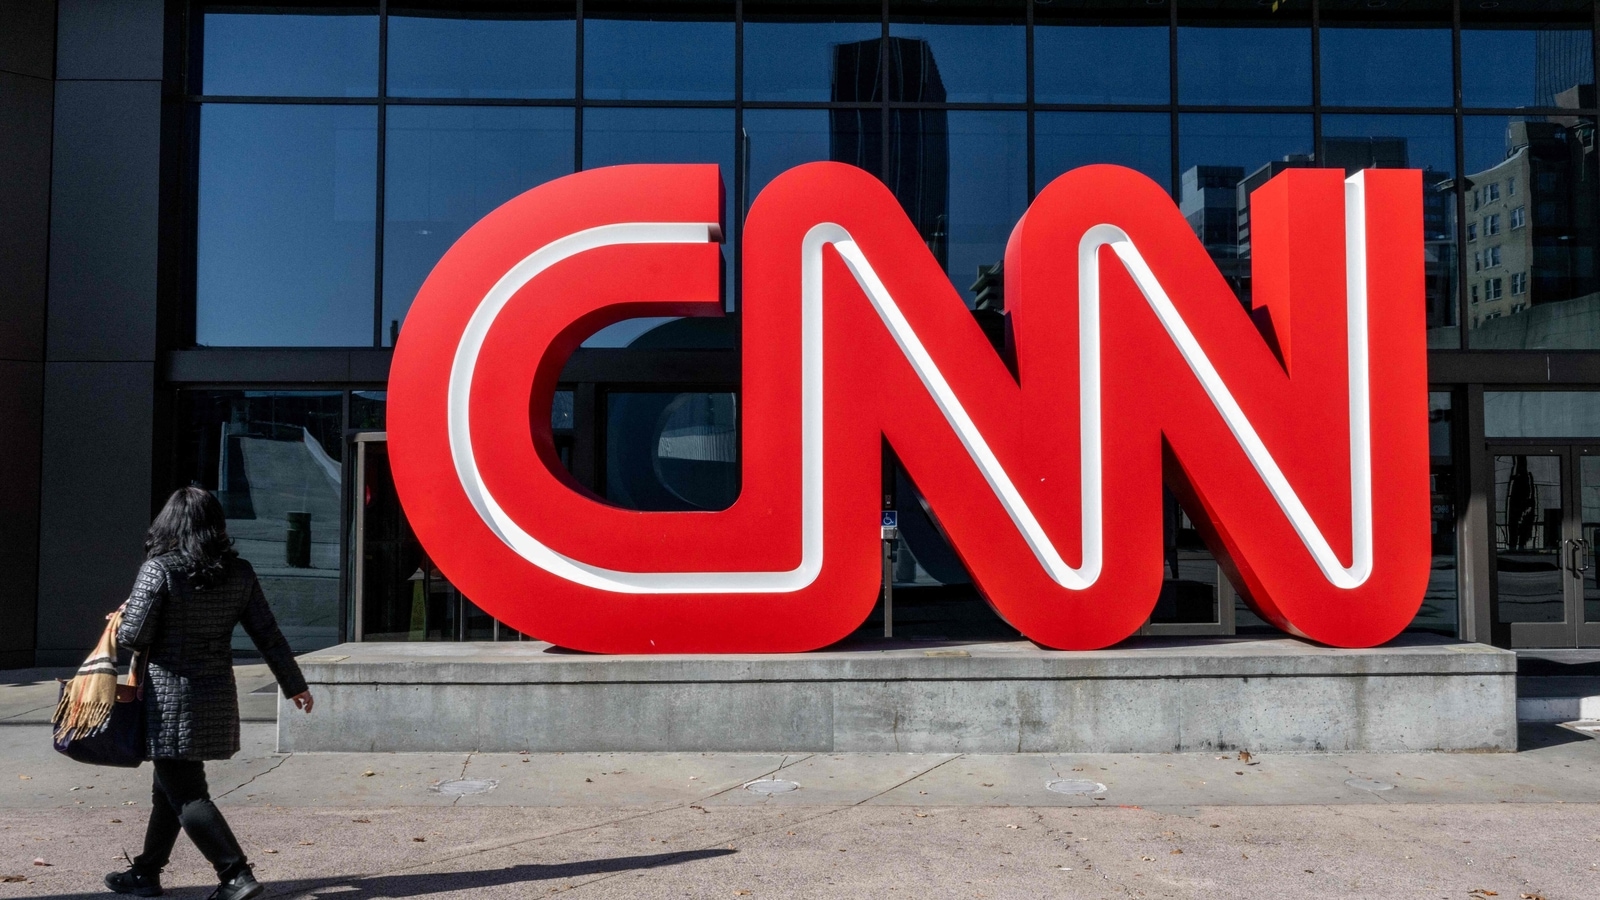 CNN, Vox, Washington Post: US media giants announce layoffs amid economic gloom